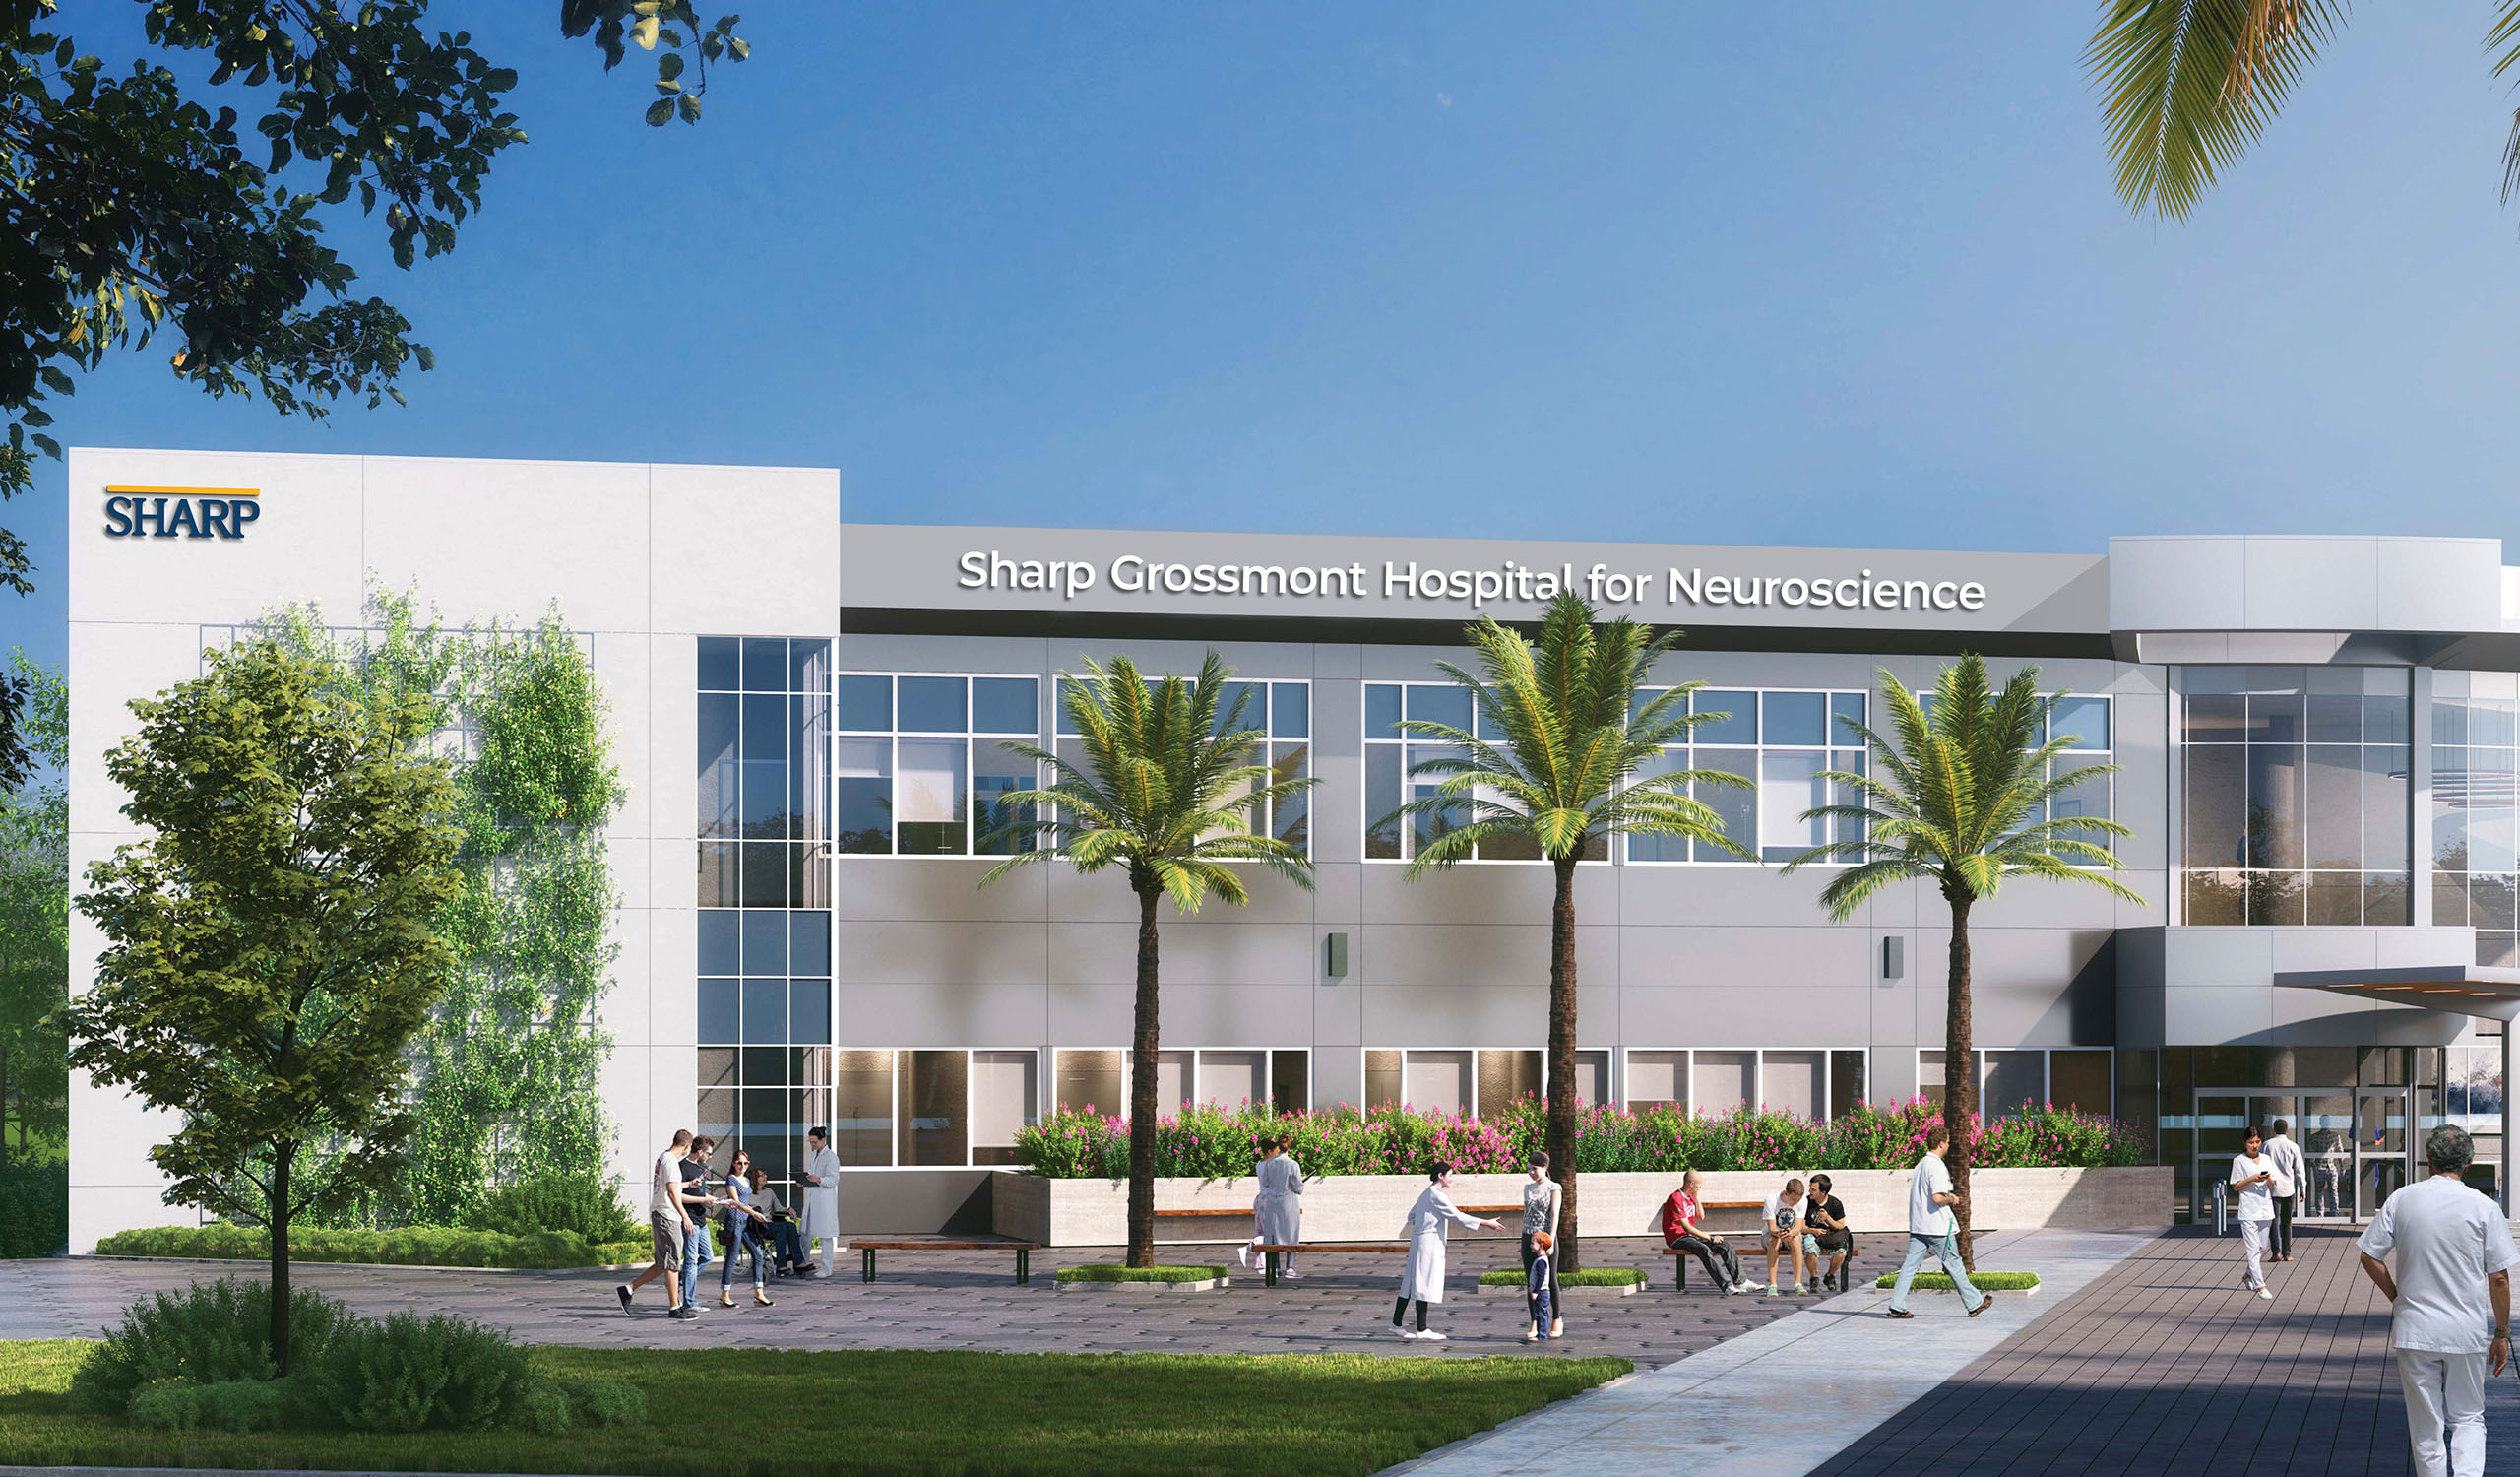 Facade of Sharp Grossman Hospital for Neuroscience